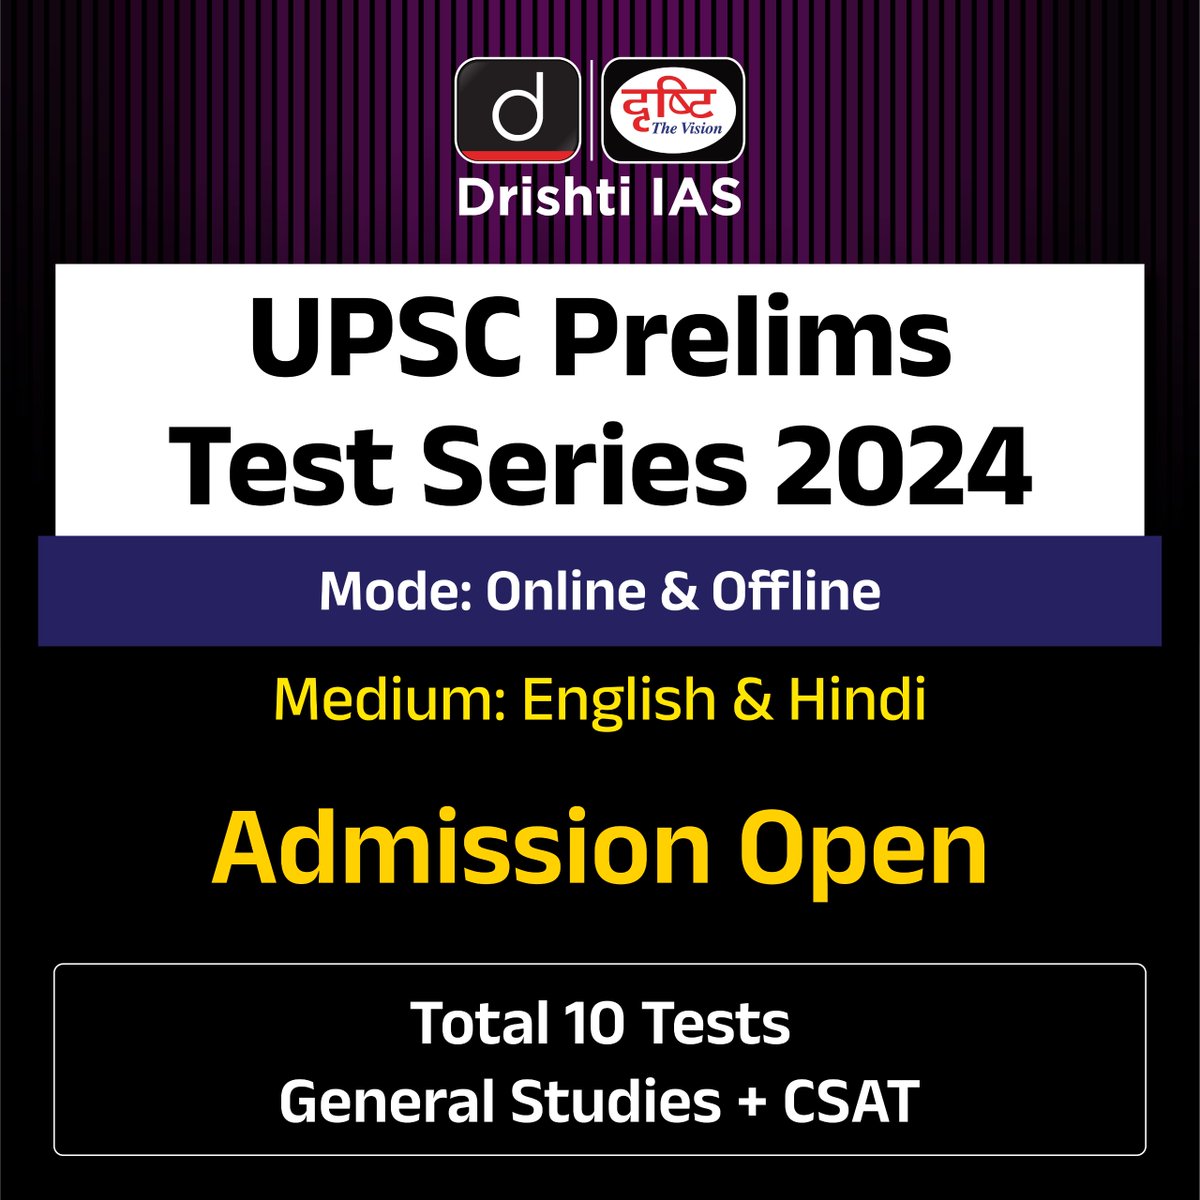 Evaluating your #Preparation before the actual #Prelims #Exam is a must for any #UPSC #Aspirant! Join the #PrelimsTestSeries2024 now Enrol now: drishti.xyz/UPSC-PrelimsTe… #UPSC2024 #Prelims2024 #Aspirants #Mentor #CurrentAffairs #TestSeries #IAS #CSE #DrishtiIAS #DrishtiIASEnglish